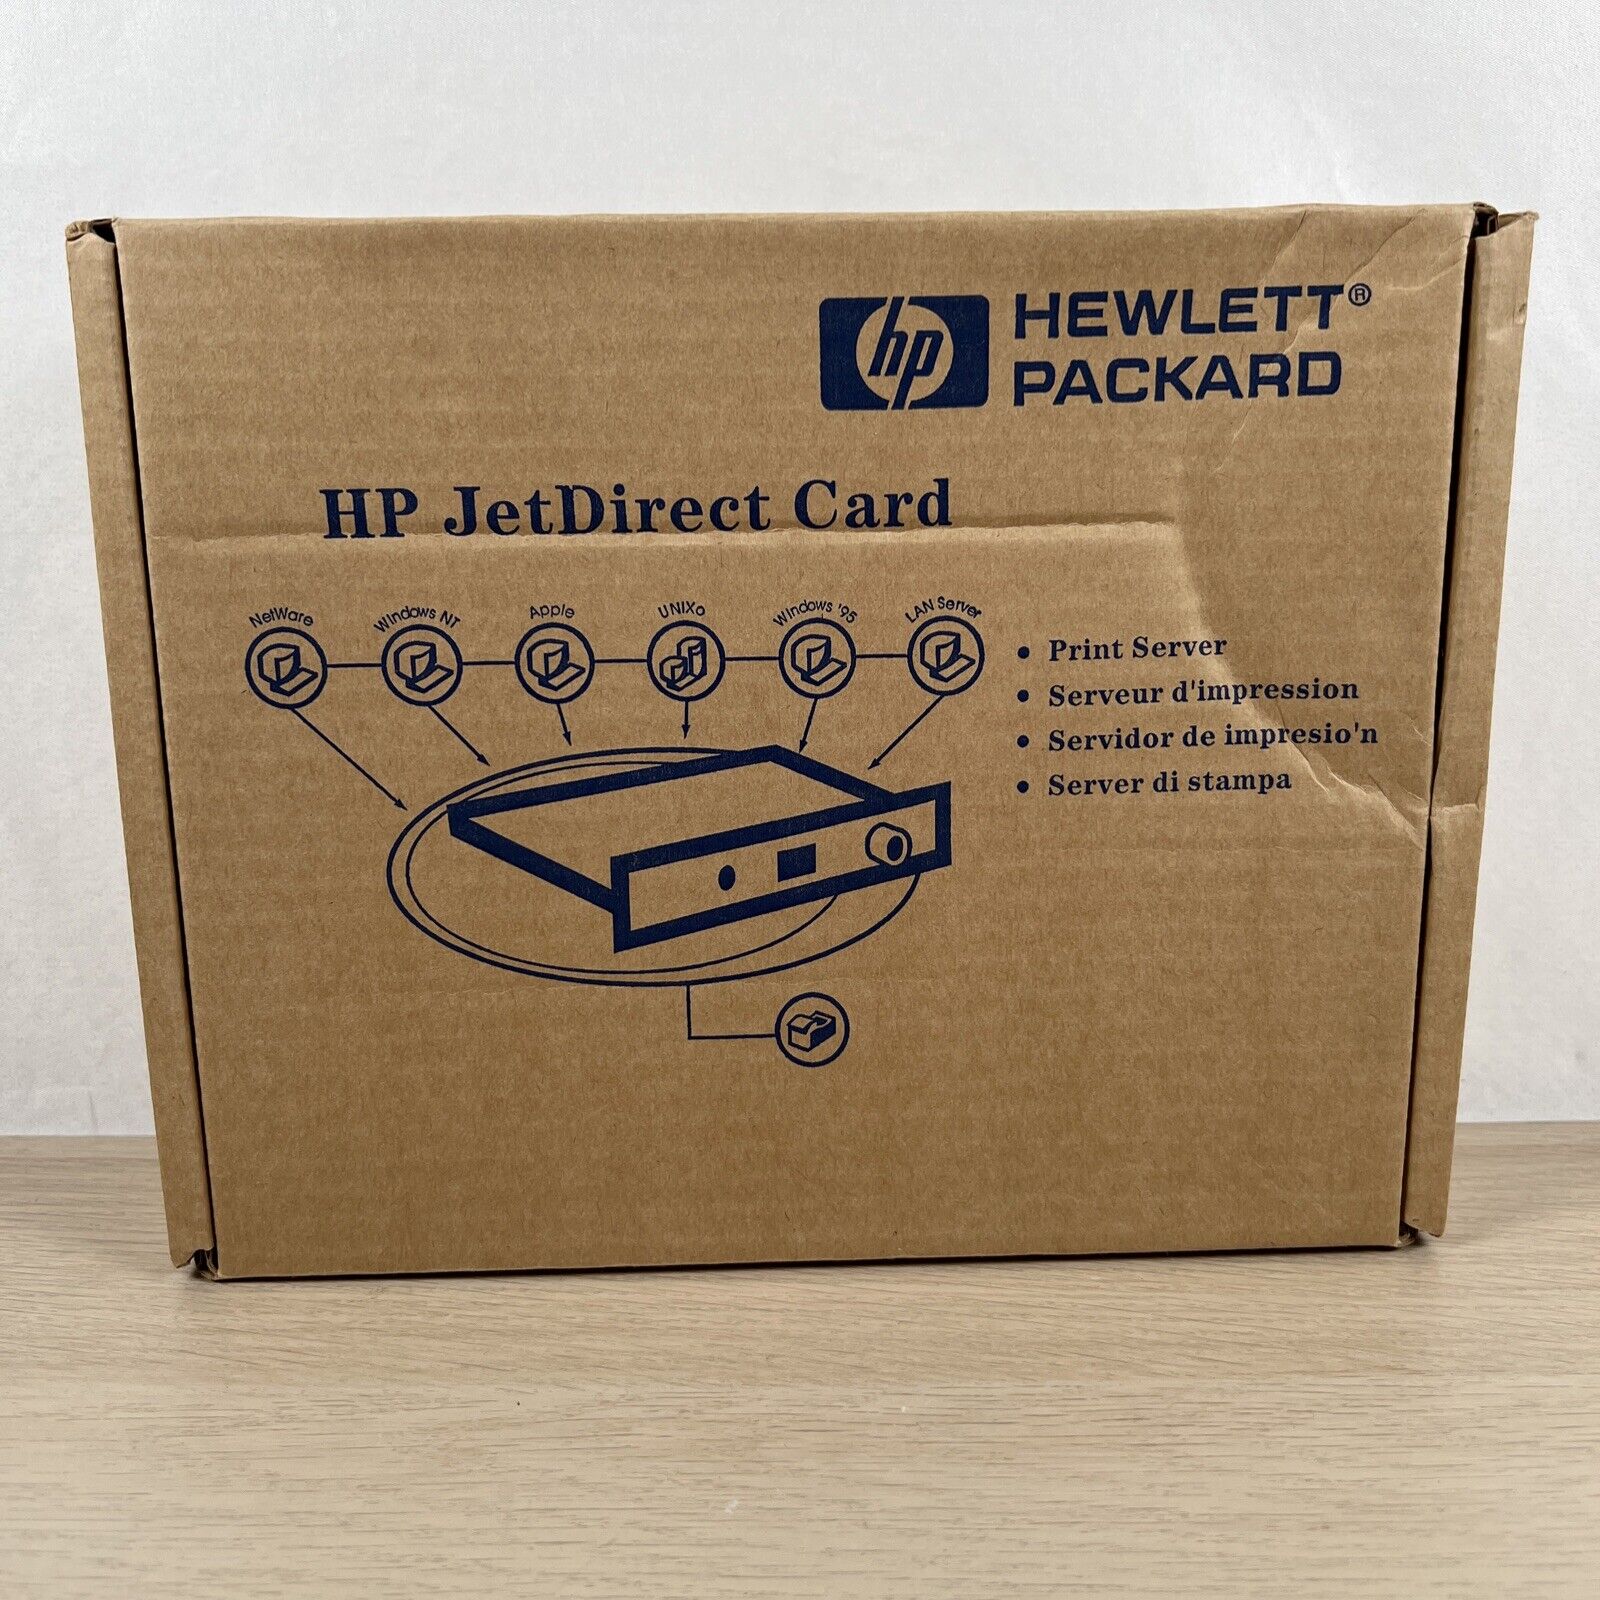 HP HEWLETT PACKARD JETDIRECT CARD 10/100 BASE-TX J2556B New Open Box  